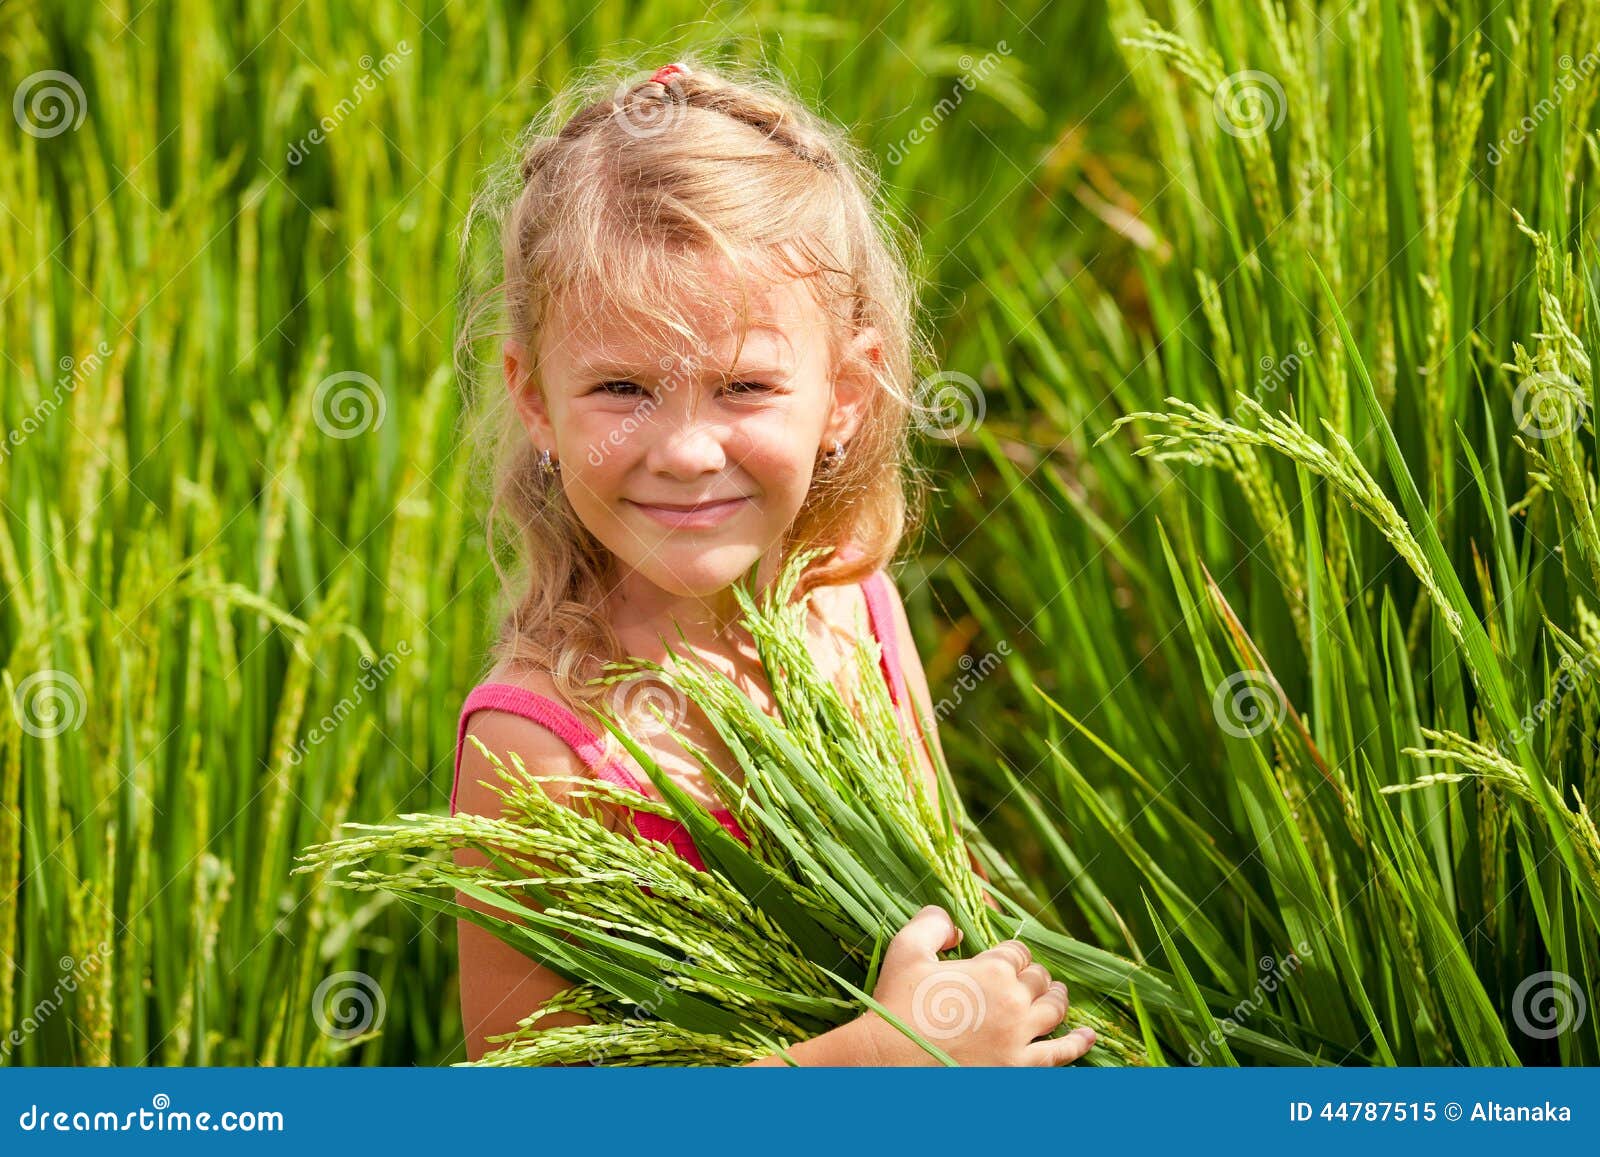 little girl on the rice paddies